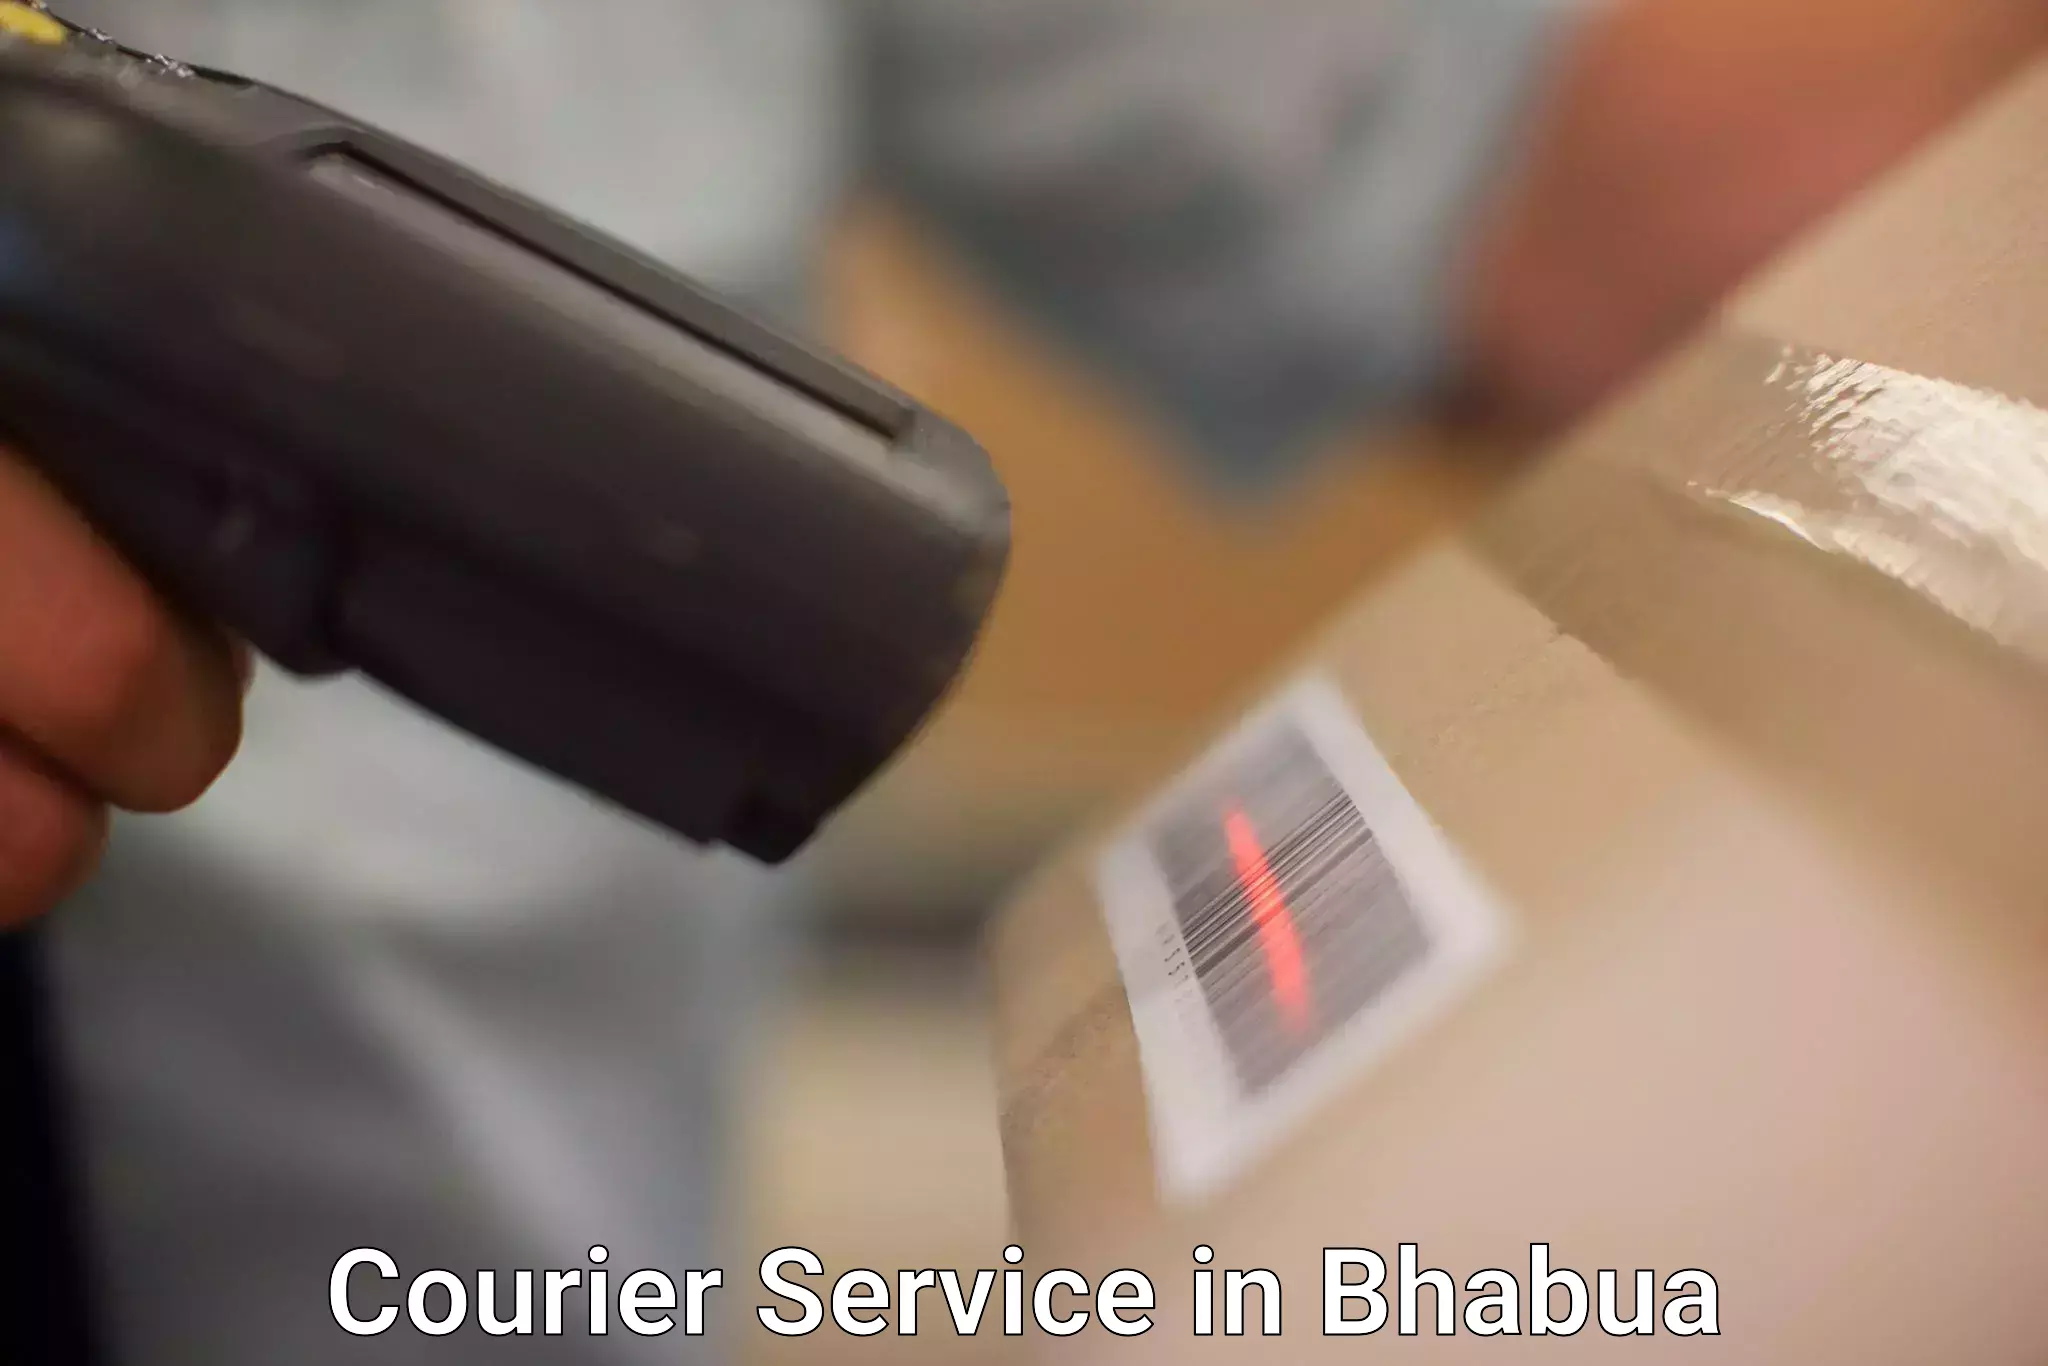 Local delivery service in Bhabua